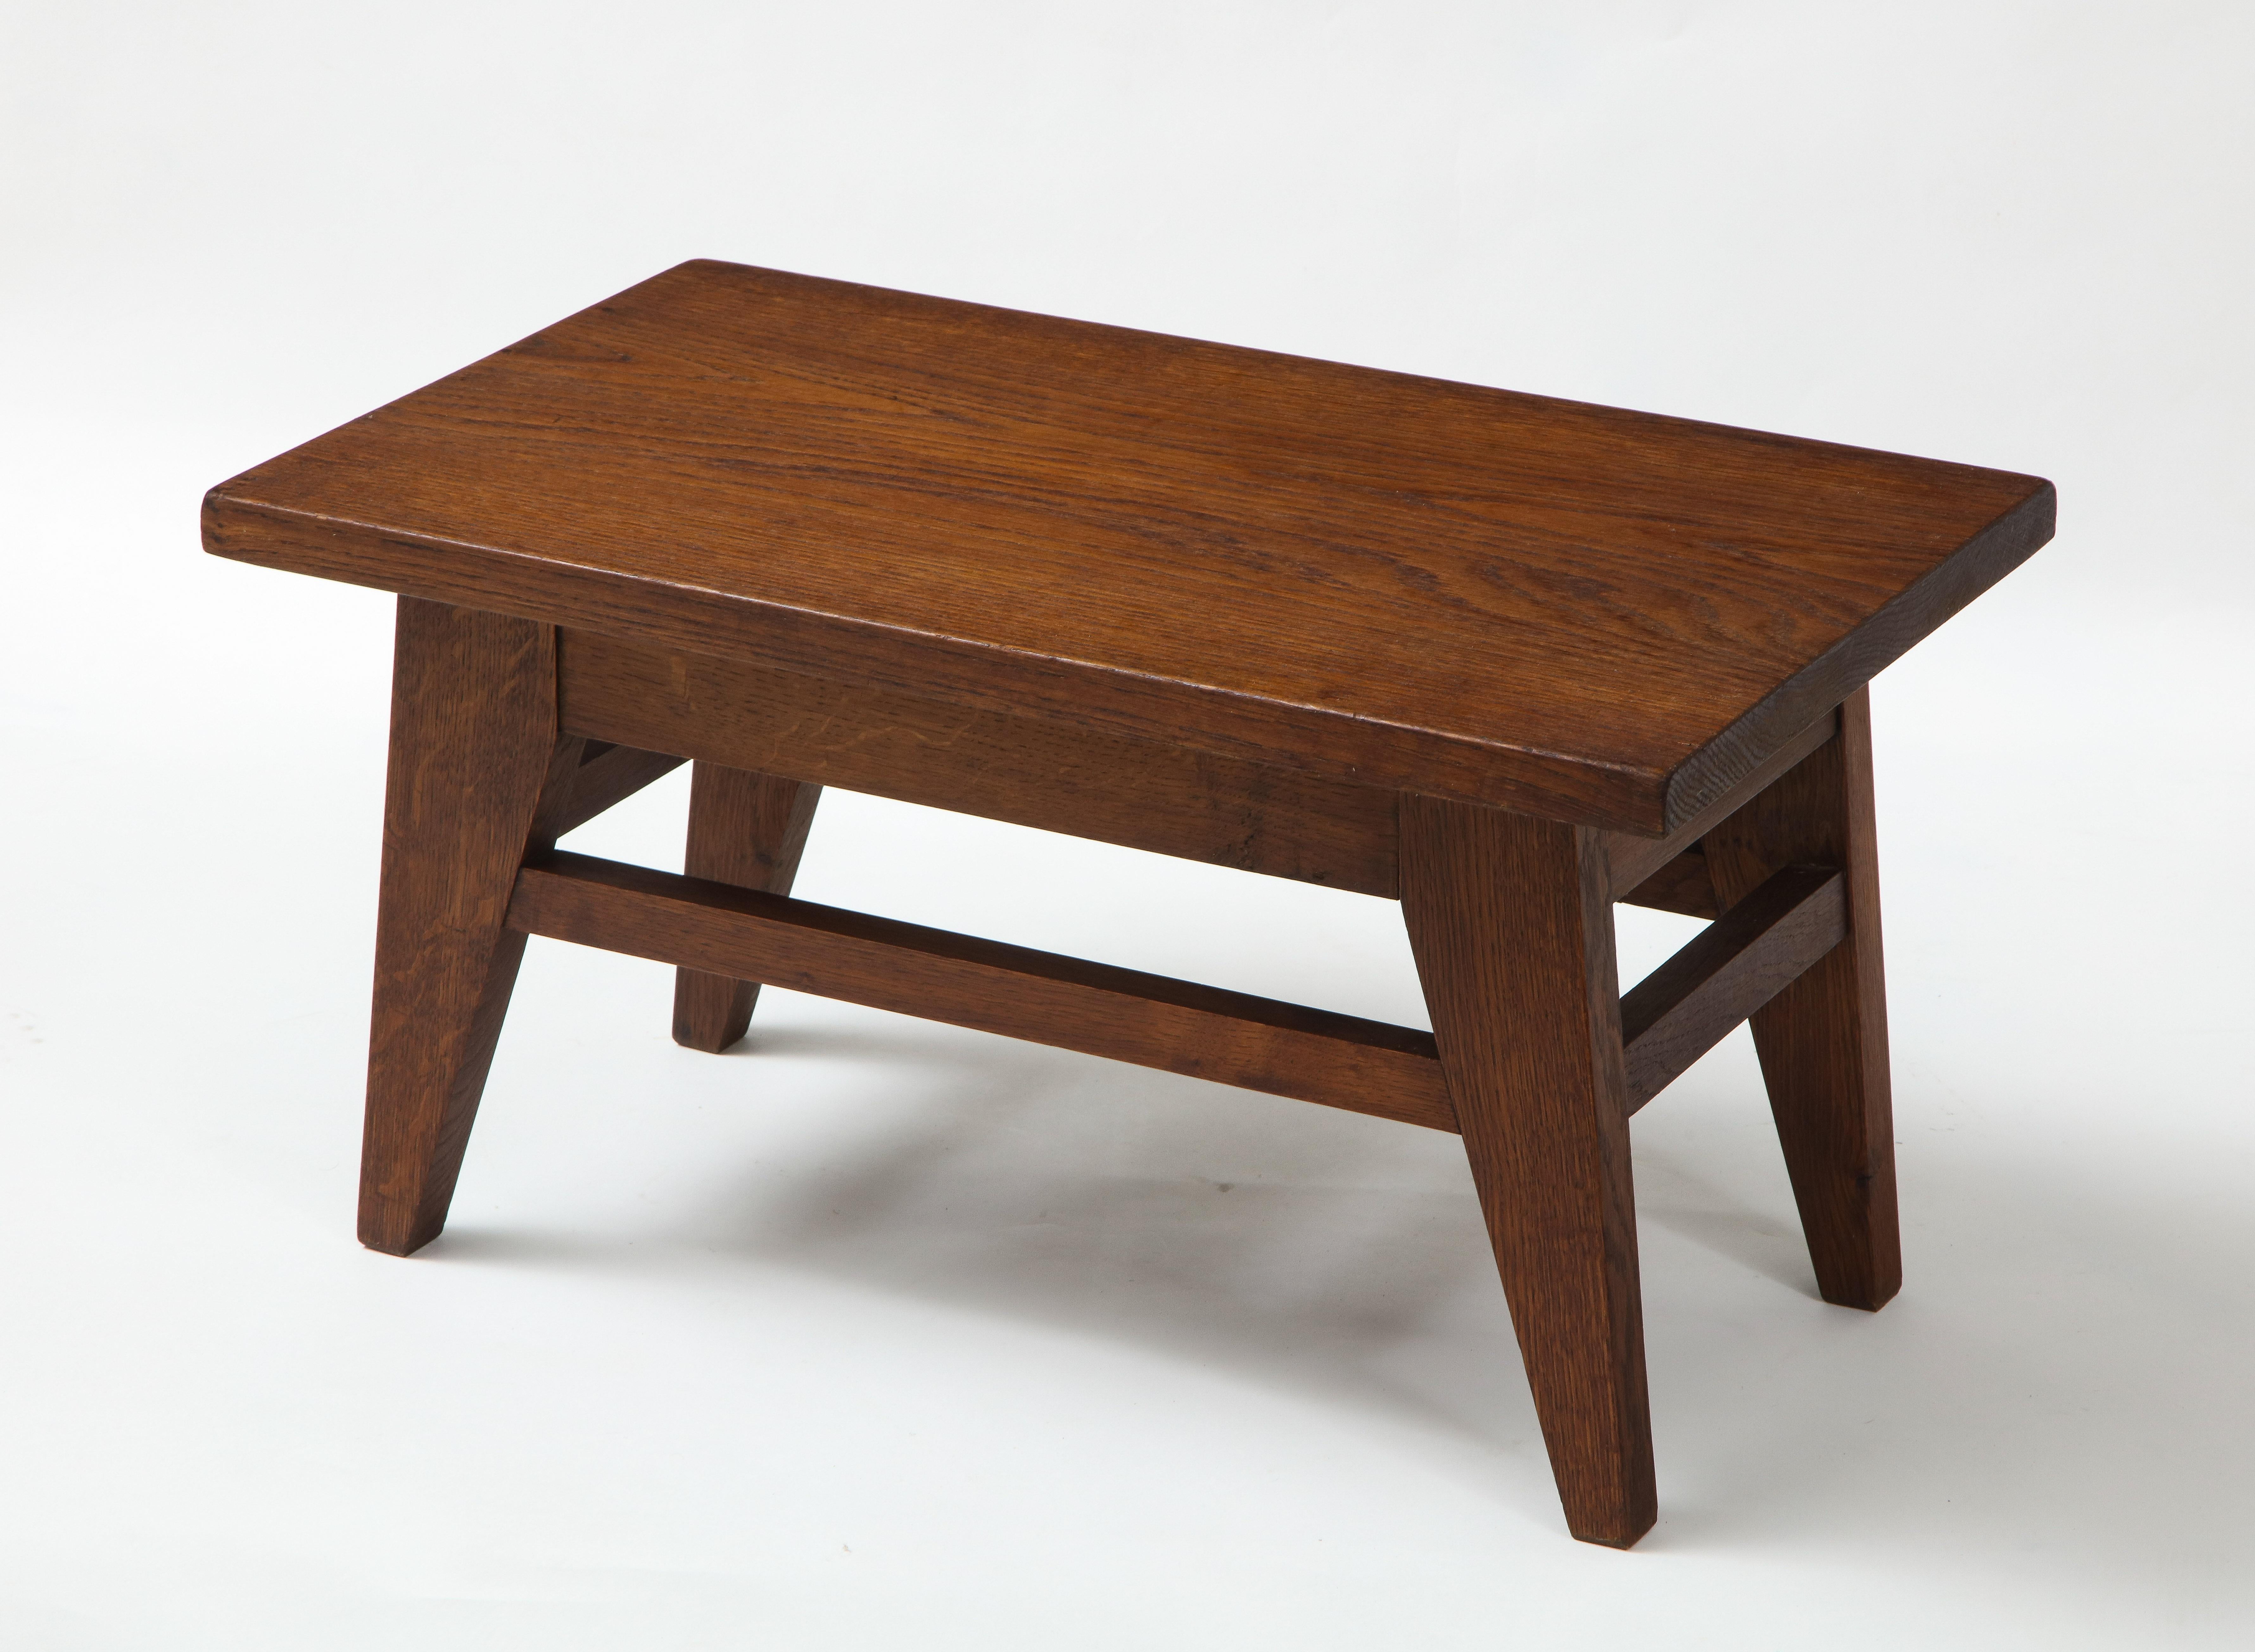 Oak René Gabriel Style Low Table Stool, France, c. 1950-60